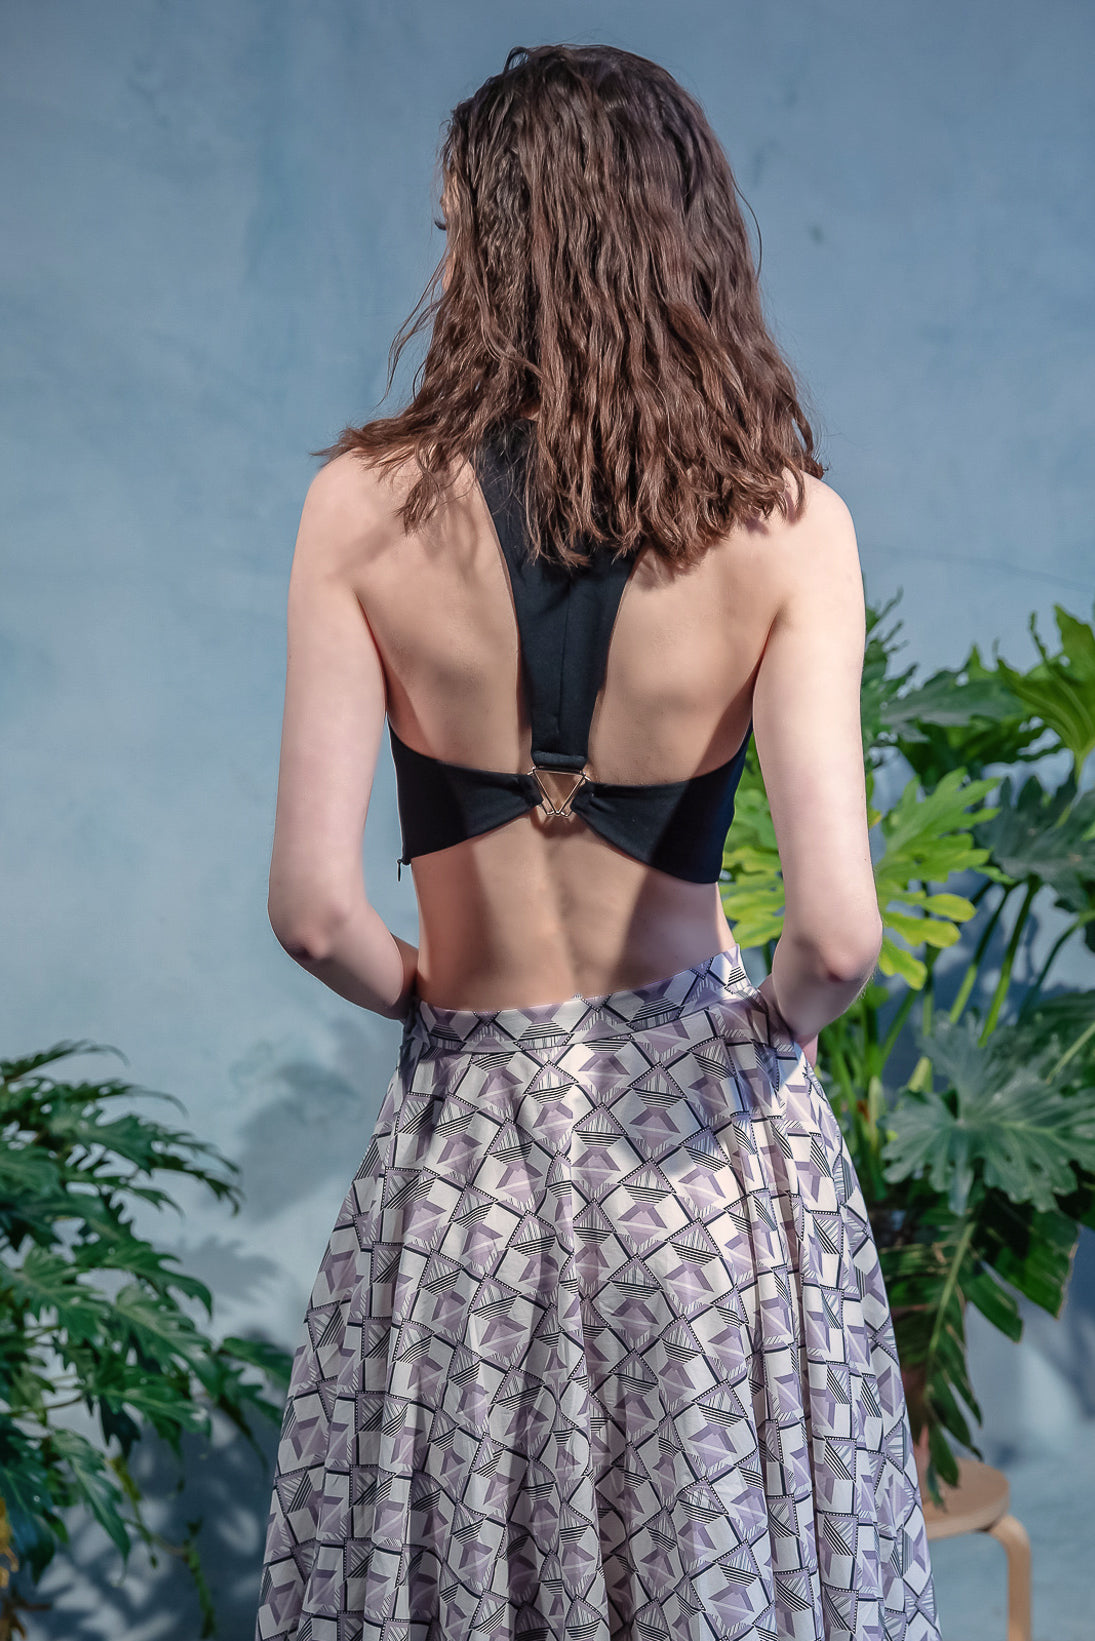 VIDYA Black Crepe Top - Back View - Harleen Kaur Womenswear - Sample Sale